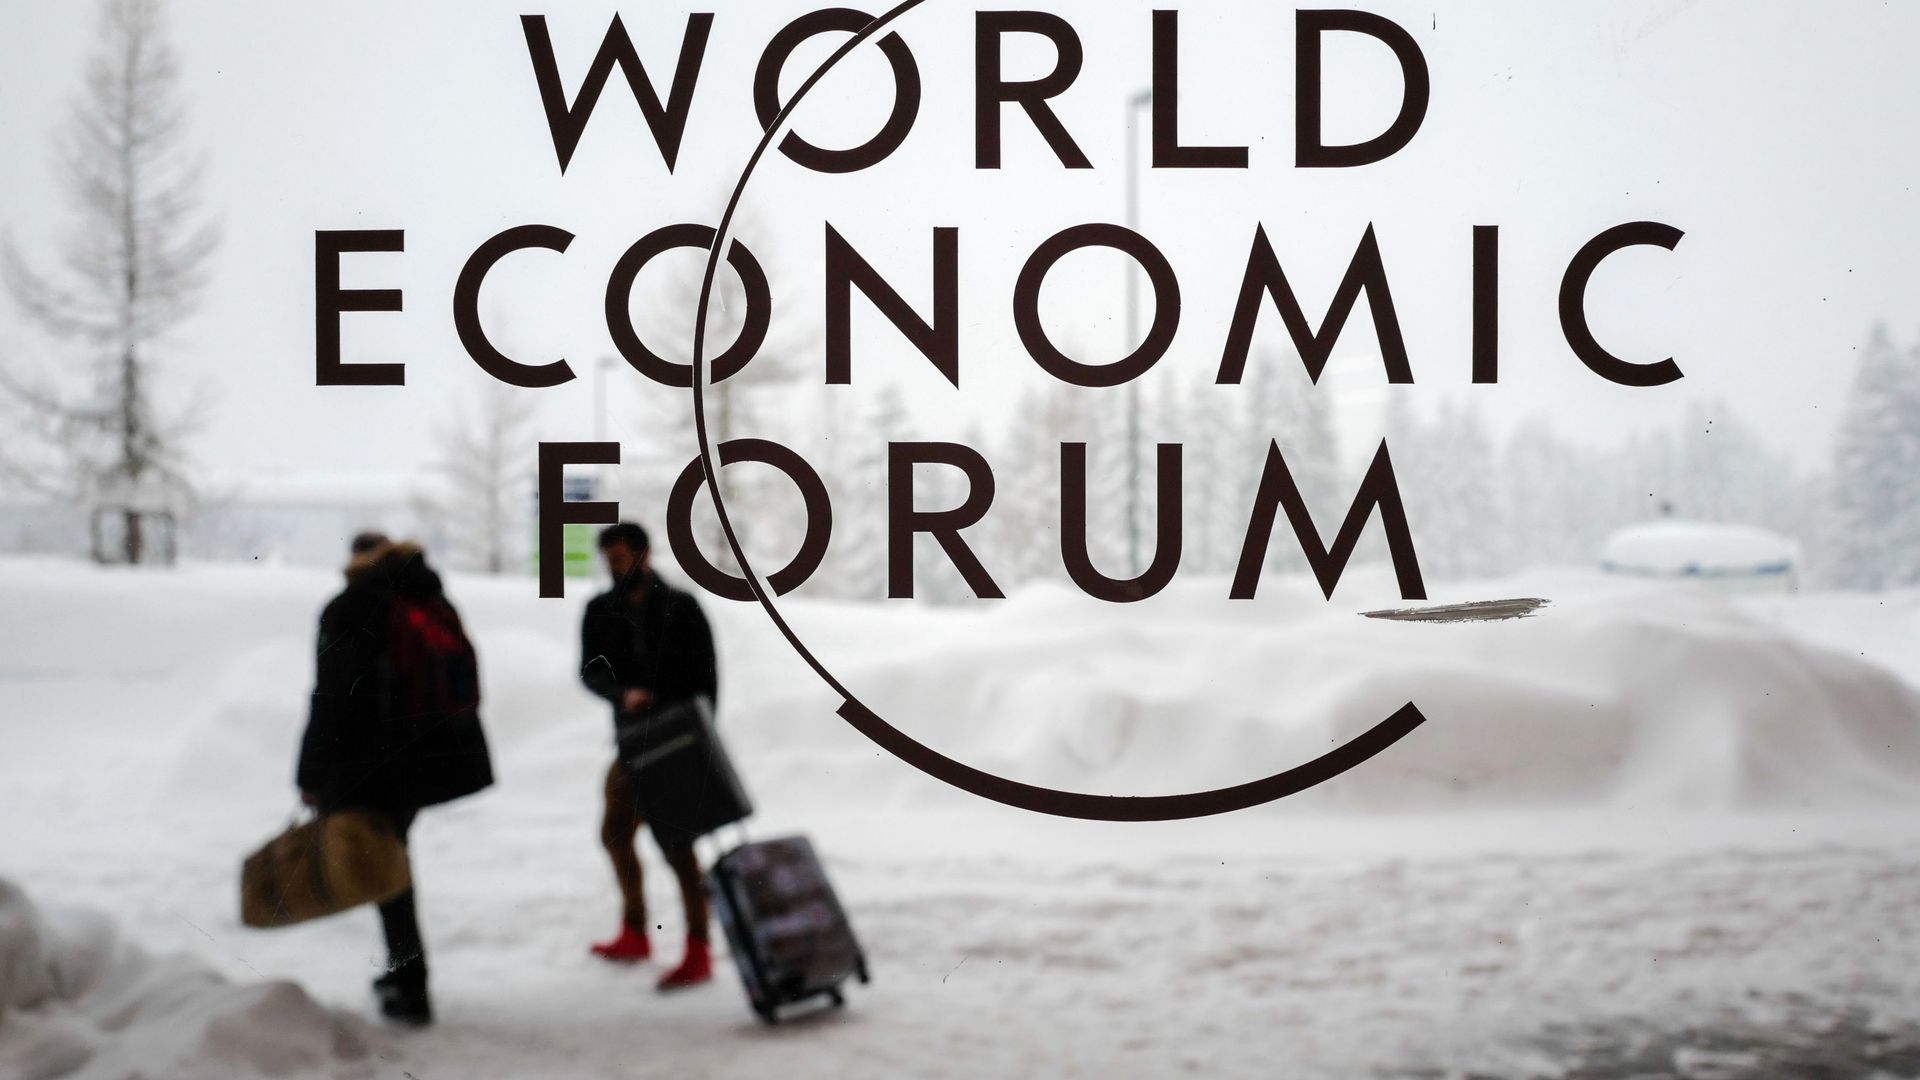 The 2018 World Economic Forum meeting in Davos, Switzerland.